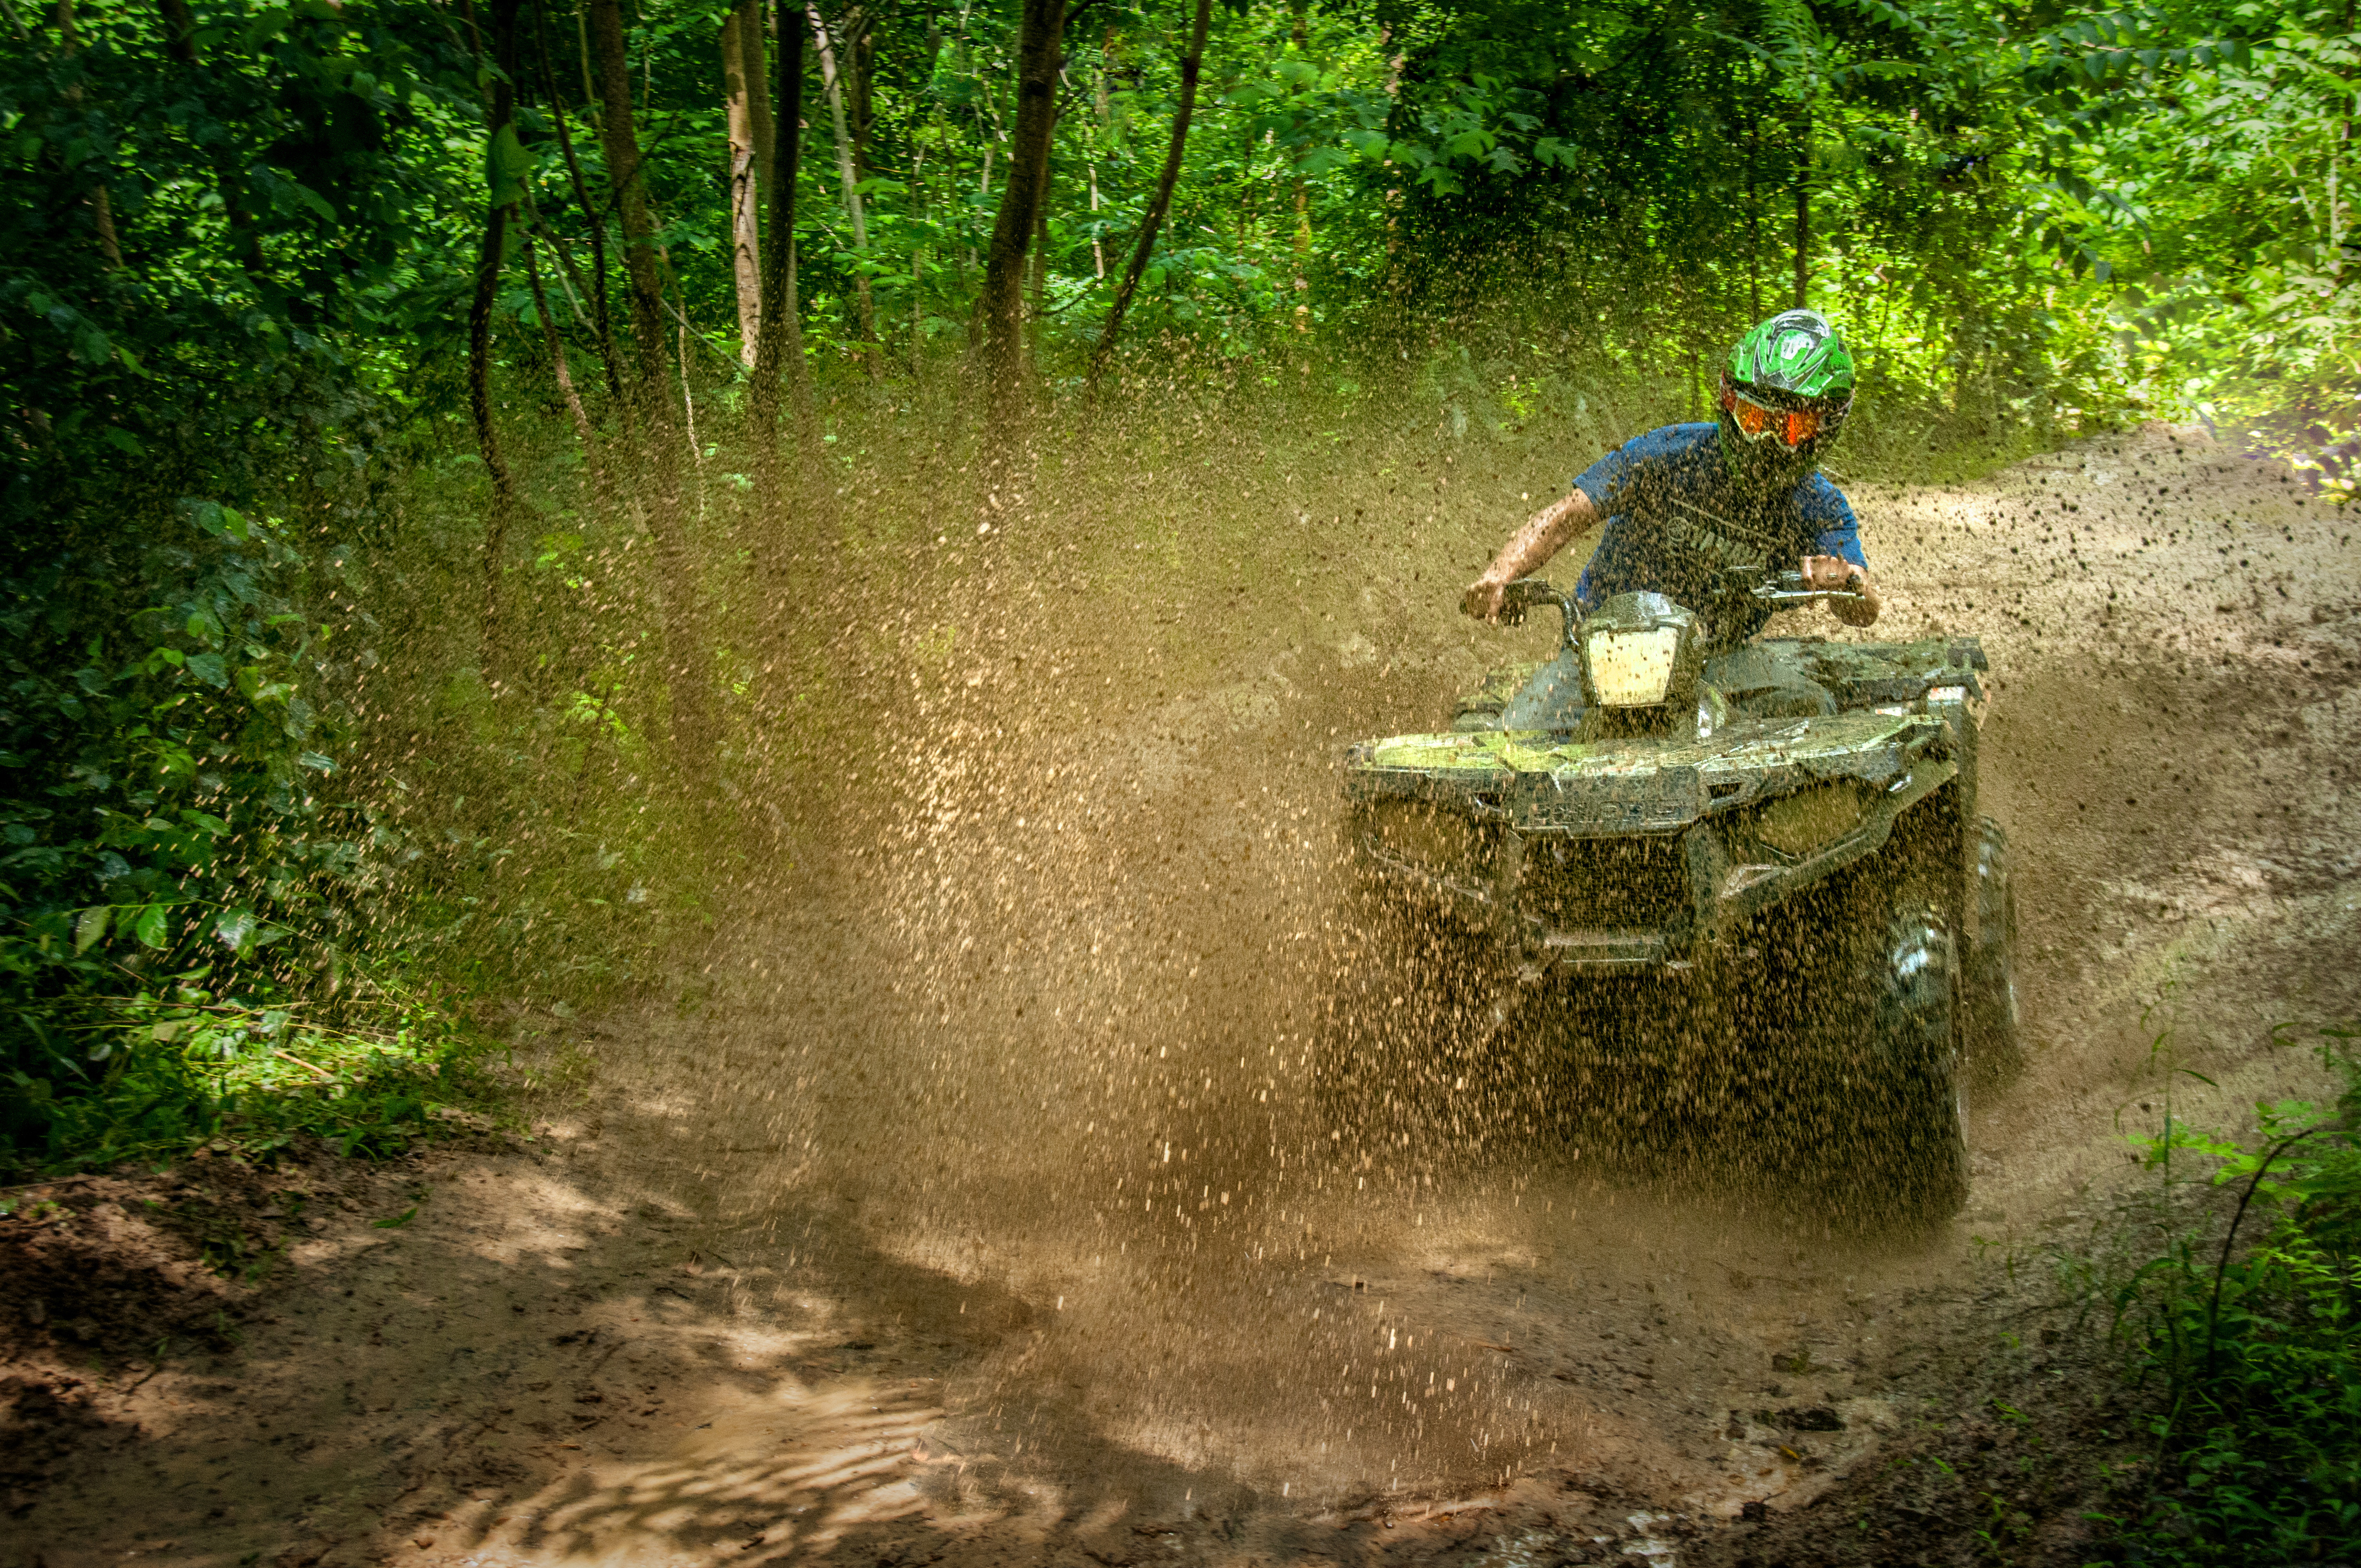 ATV riding in the mud